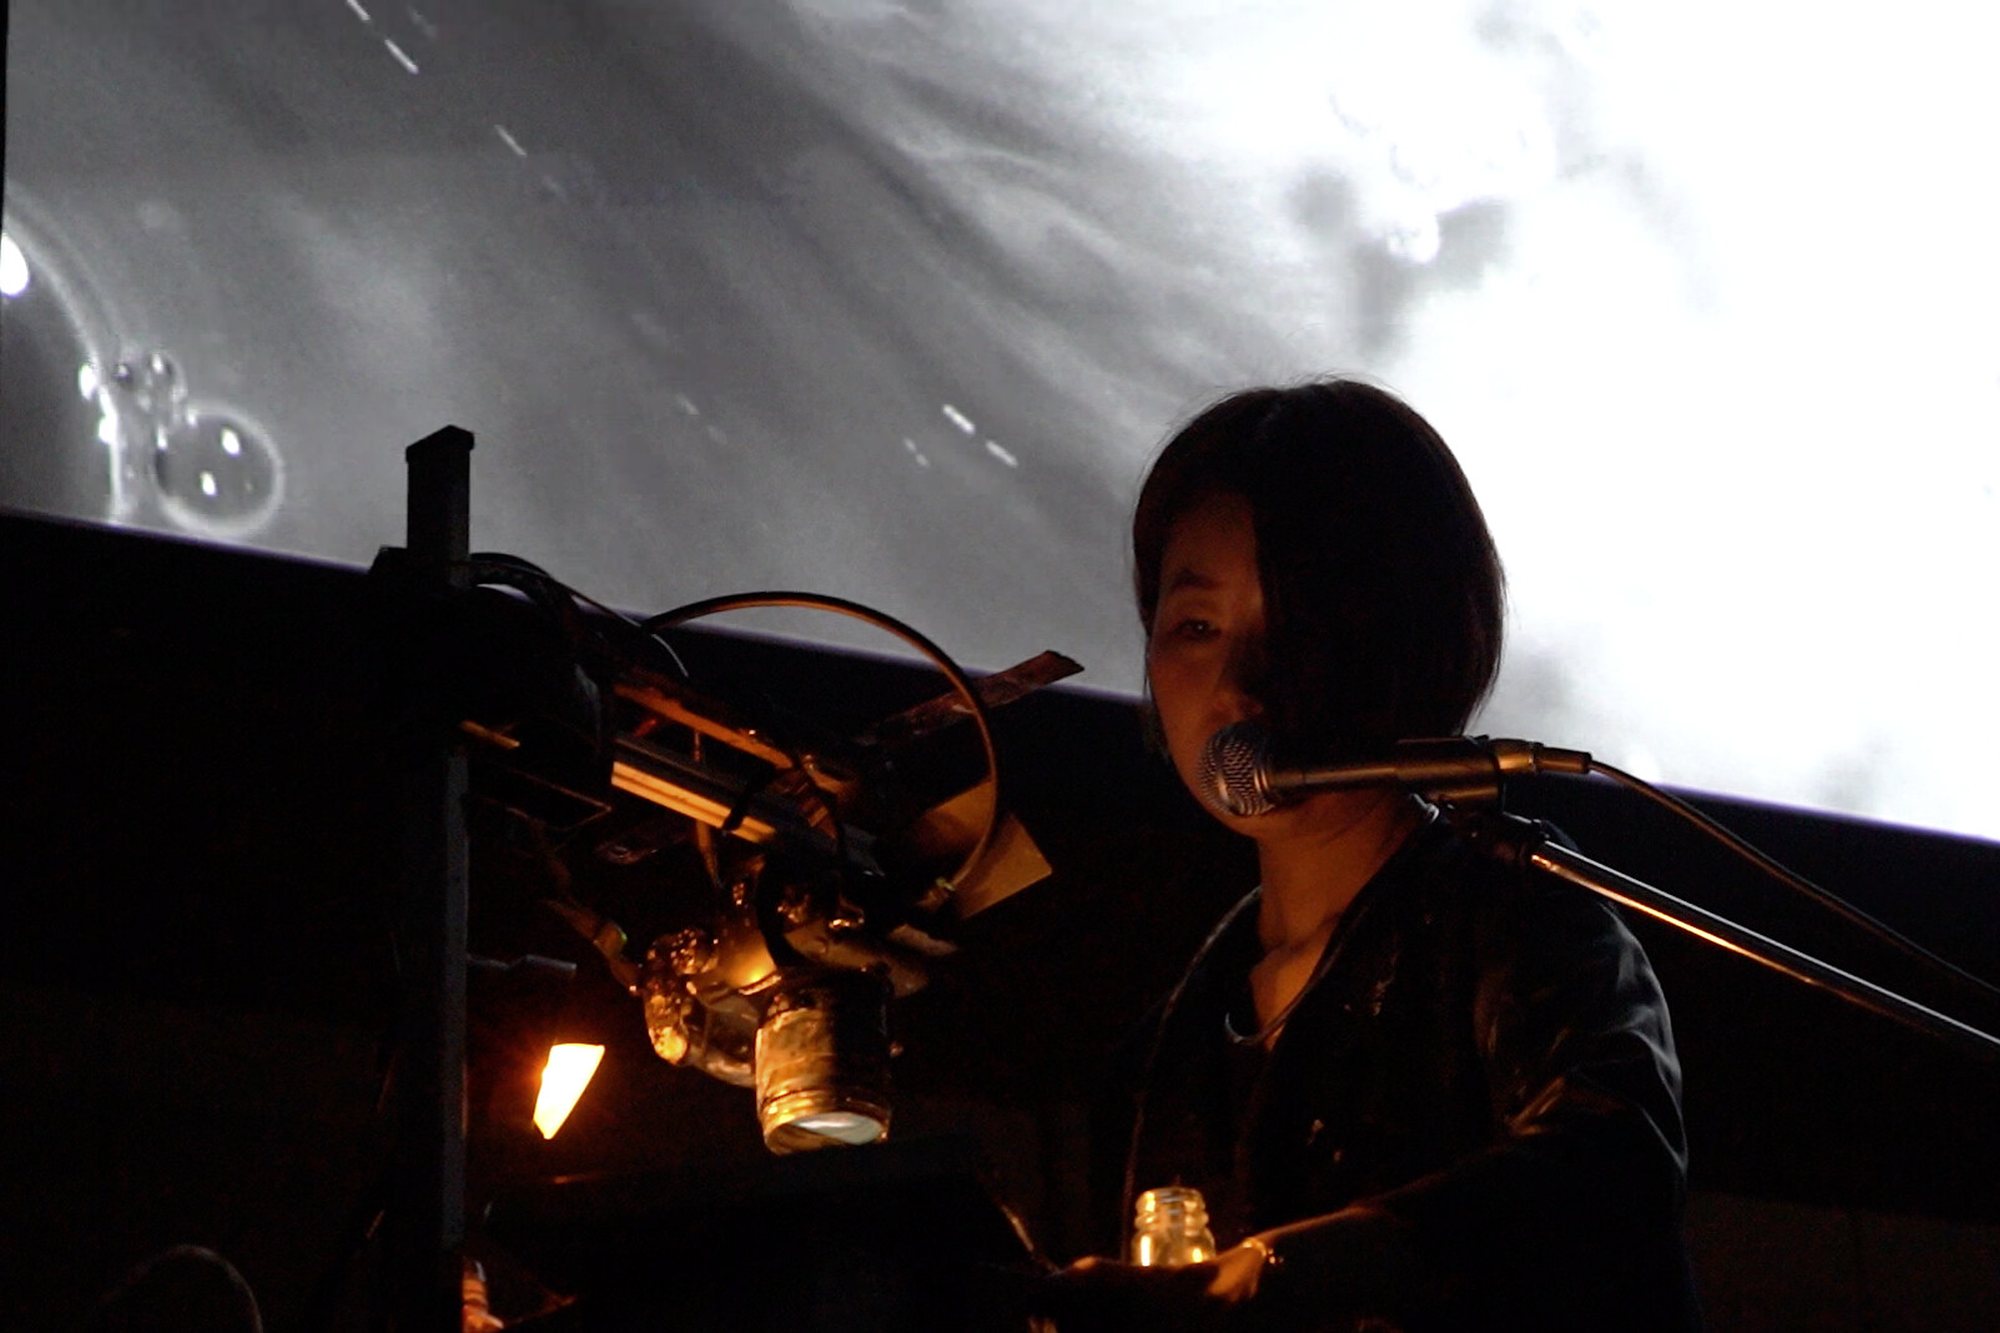 DAPPI MUSIC PERFORMANCE / Glenn Gould as A.I., Akiko Nakayama